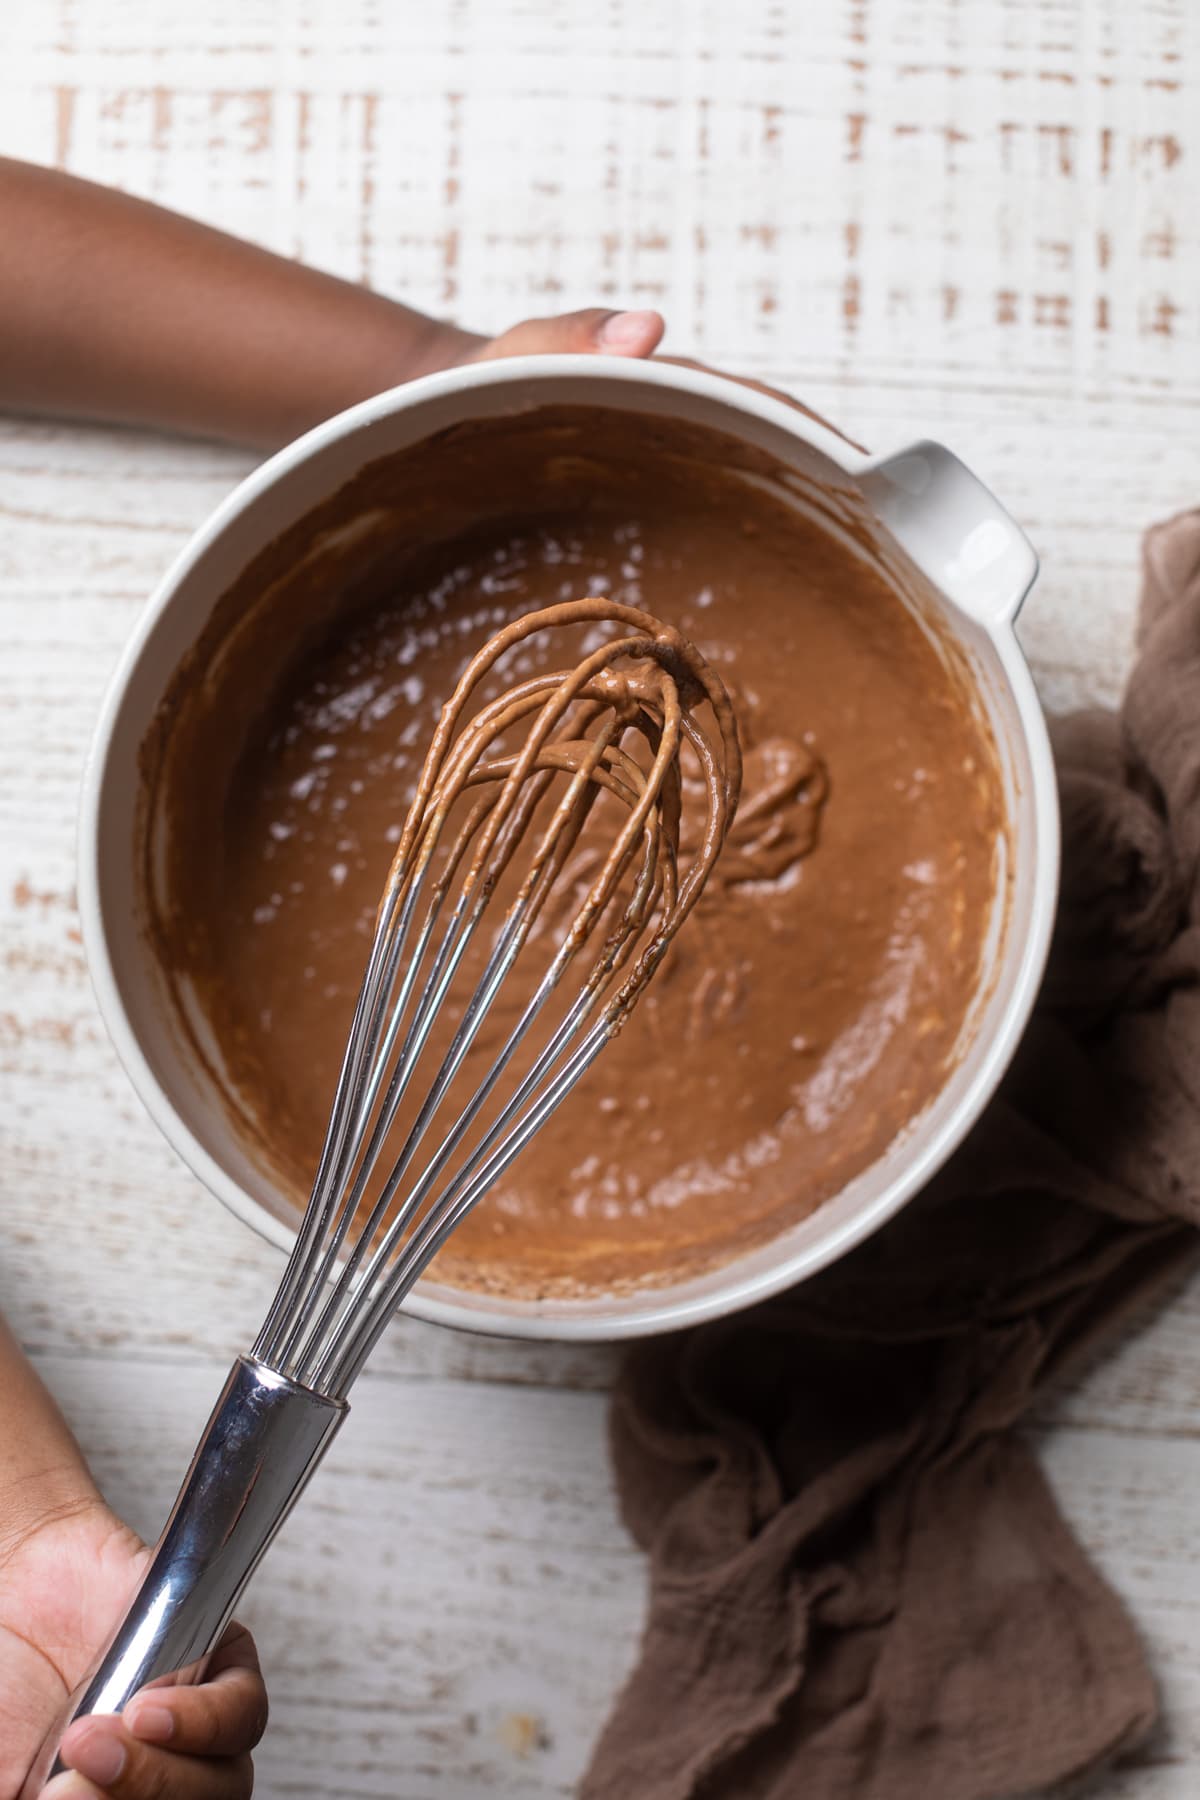 Chocolate glaze on a whisk above a bowl of chocolate glaze